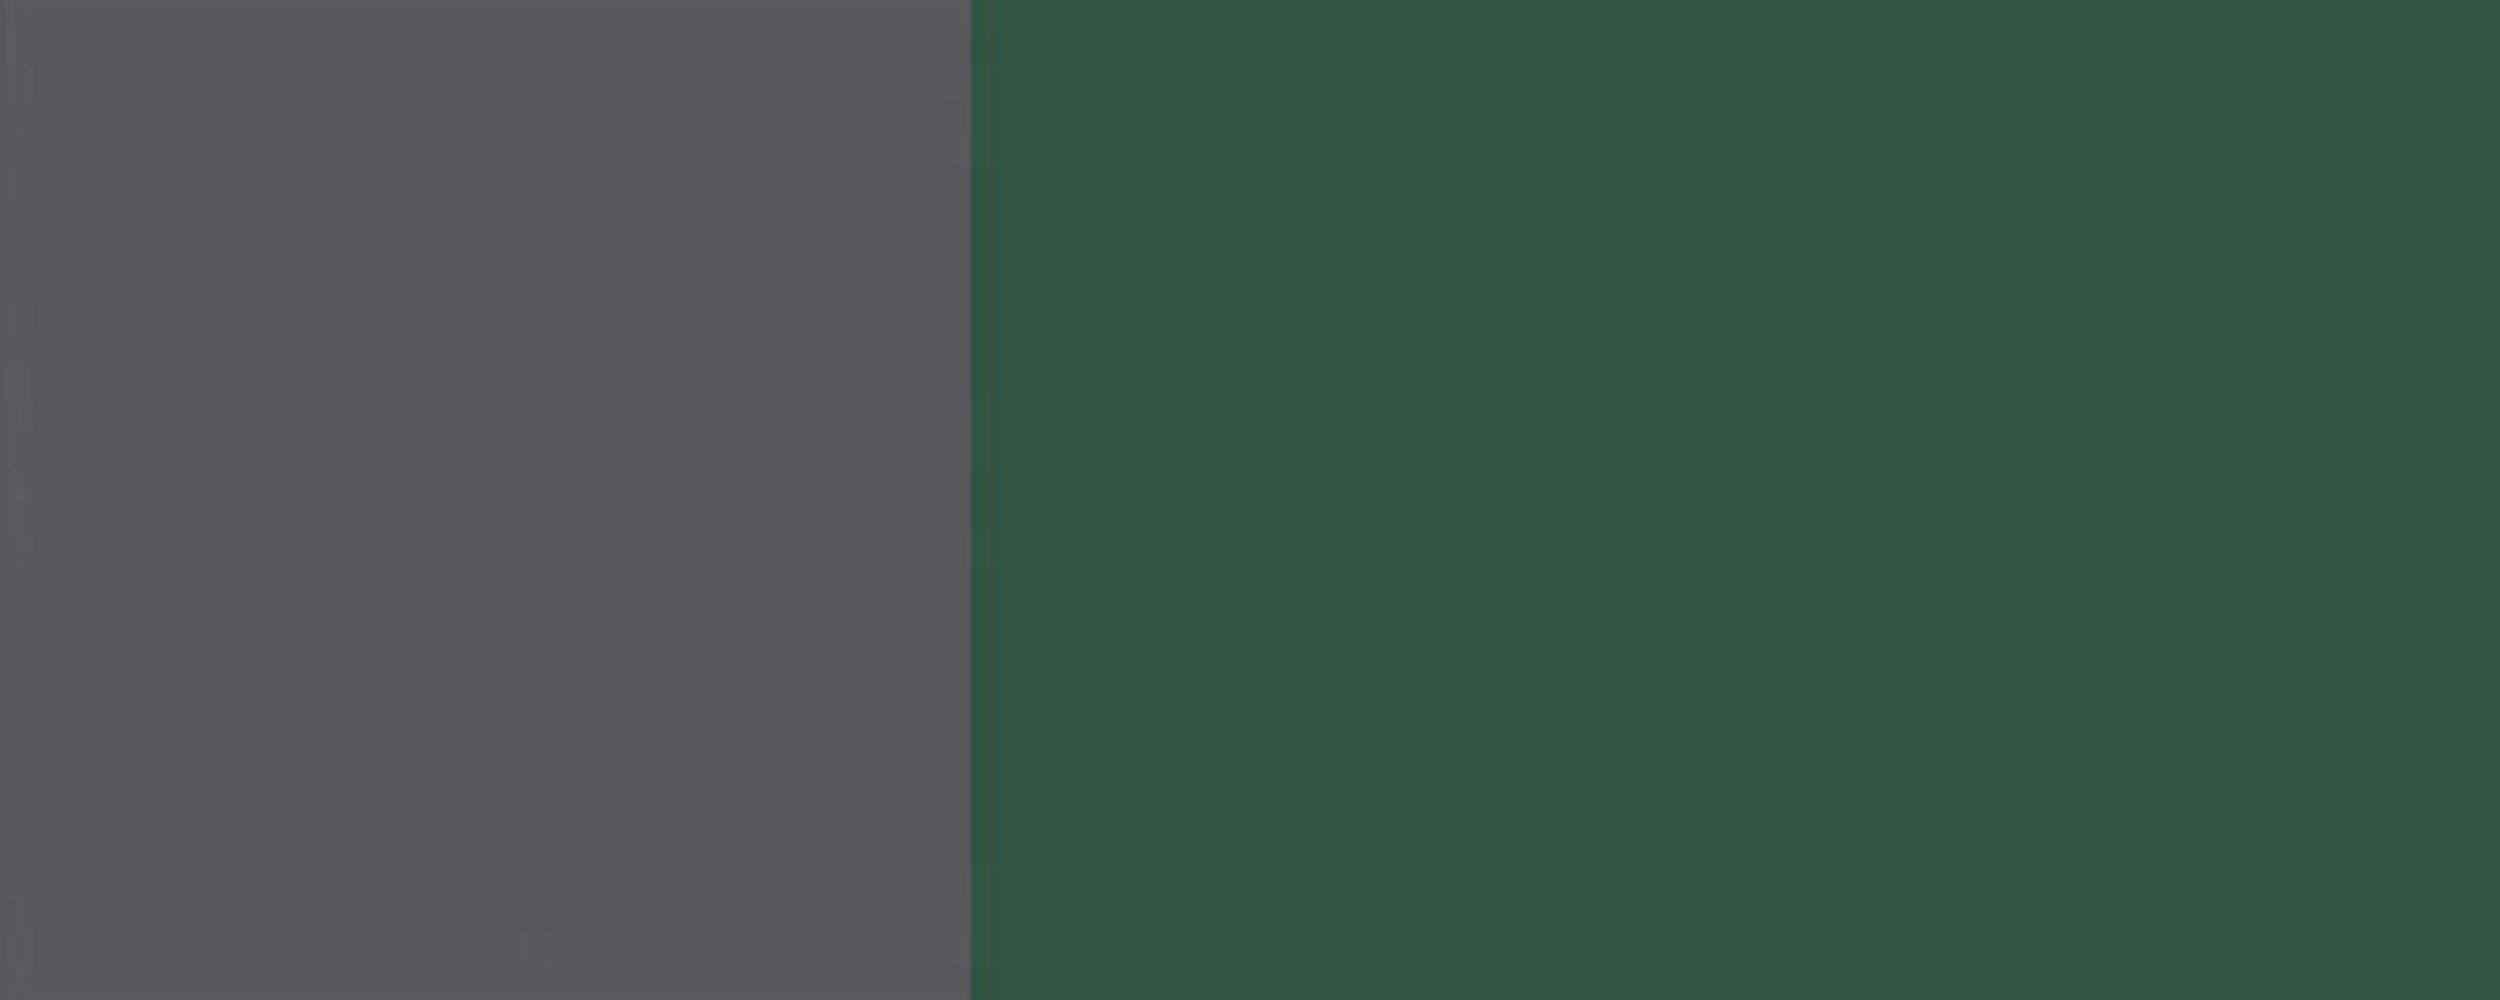 2-türig matt Hochschrank Front- Korpusfarbe (Tivoli) 6028 mit und Metallkorb kieferngrün RAL Tivoli Feldmann-Wohnen wählbar 40cm